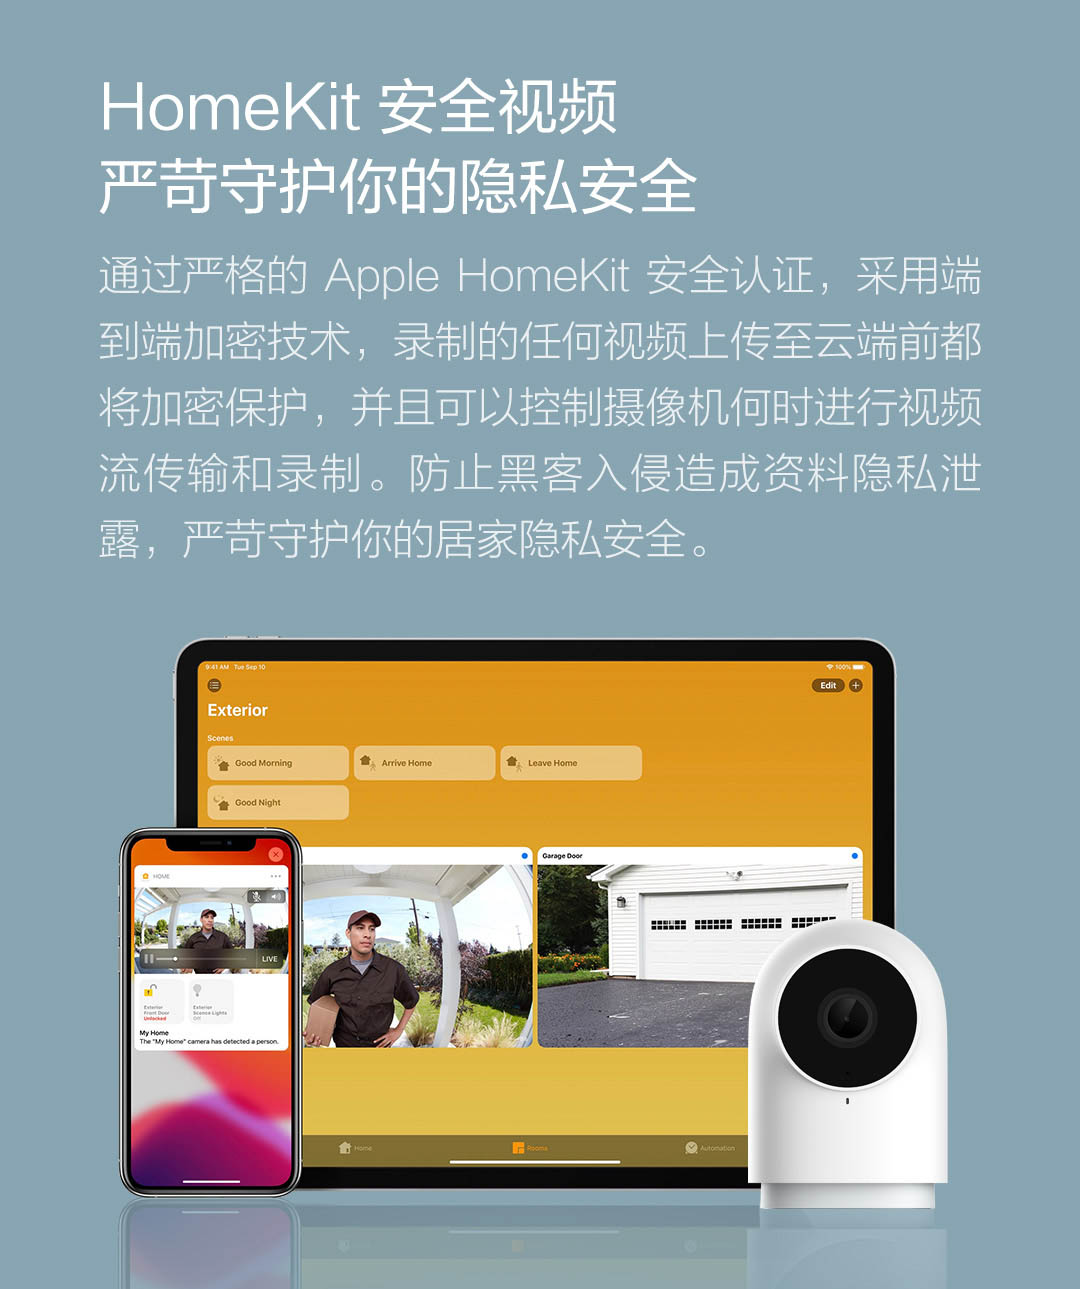 Xiaomi Aqara Akıllı Kamera G2H